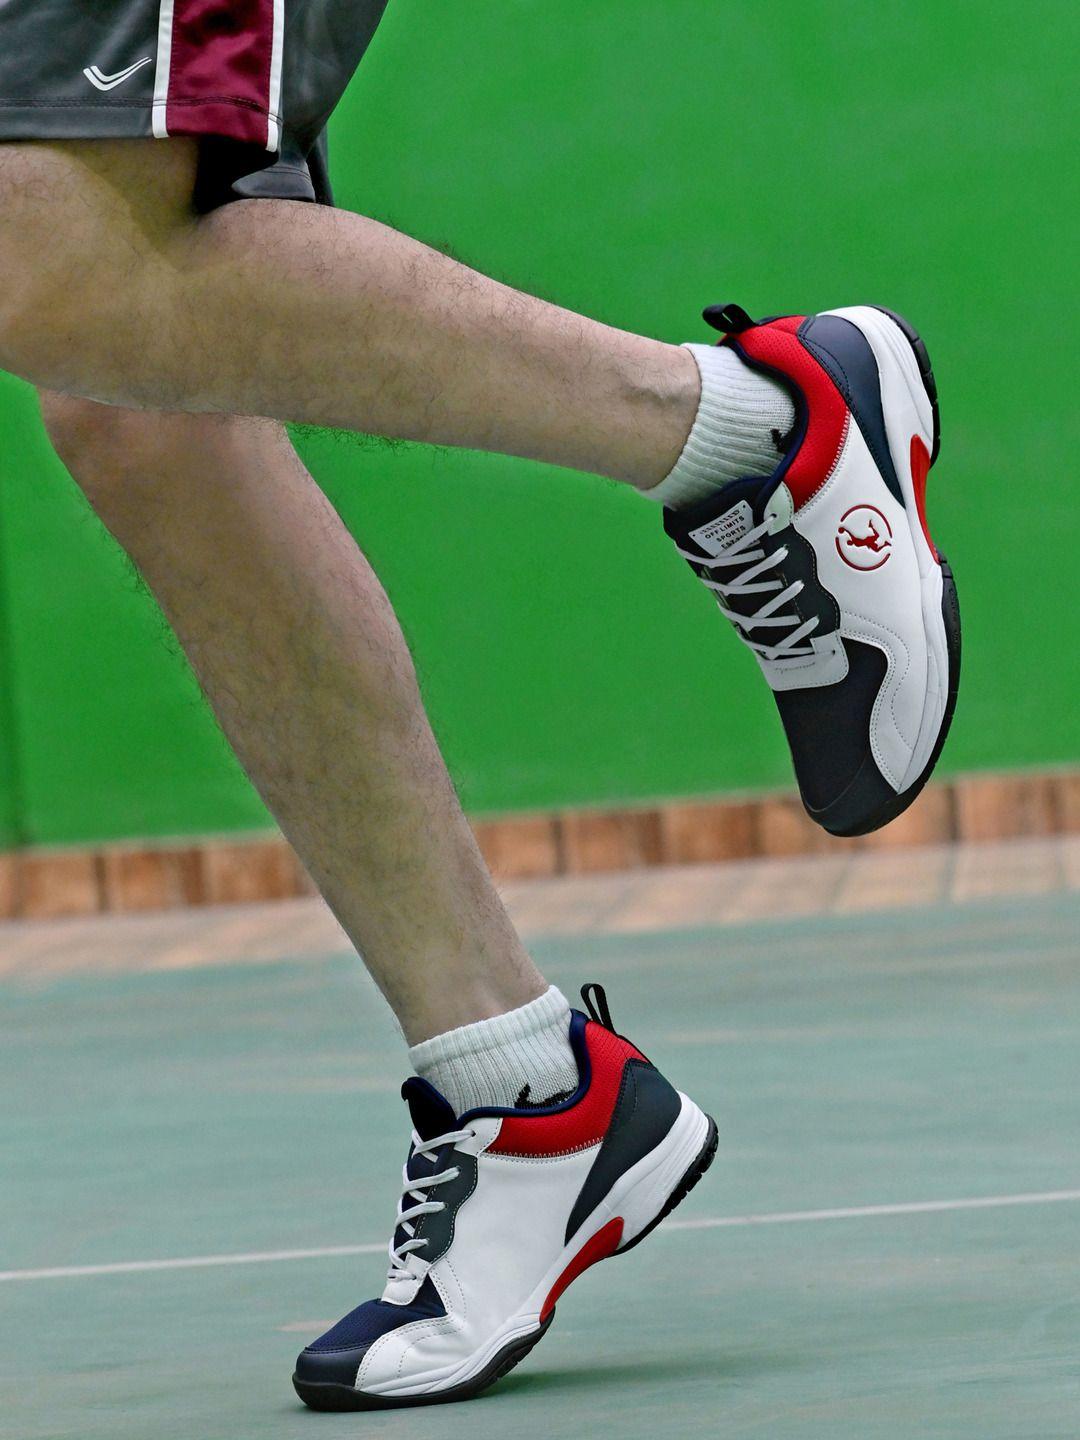 off-limits-men-tennis-non-marking-sports-shoes